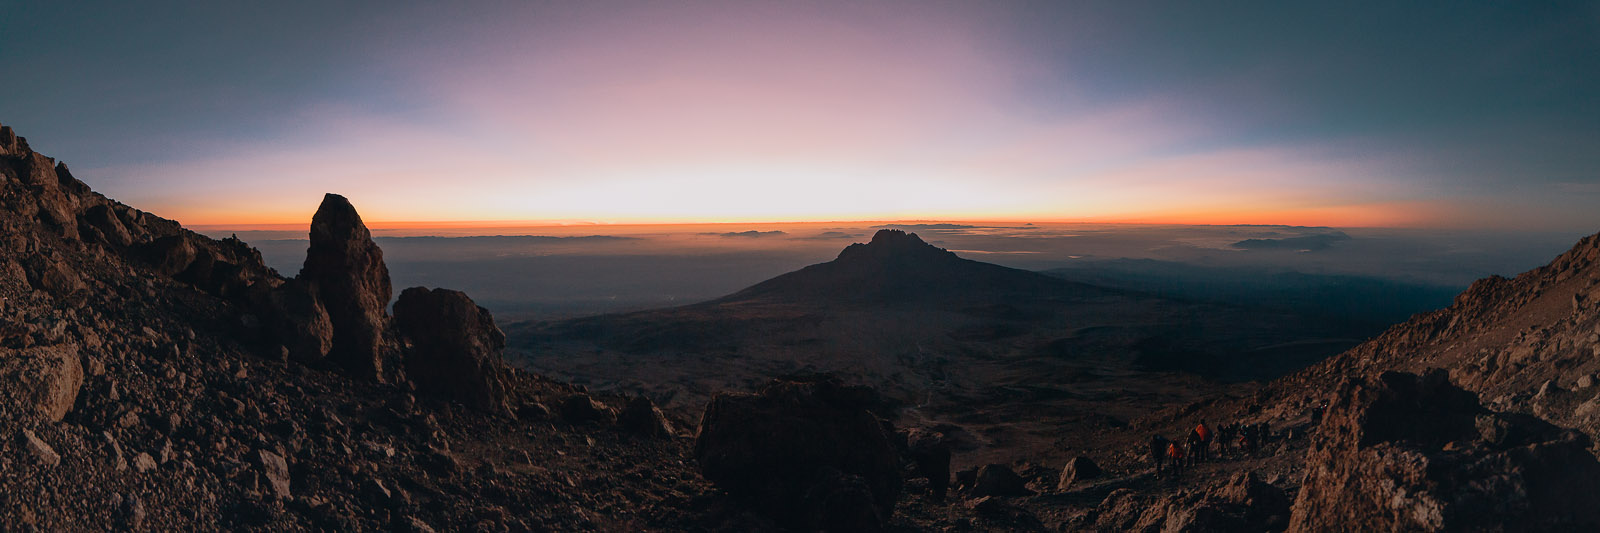 kilimanjaro summit sunrise